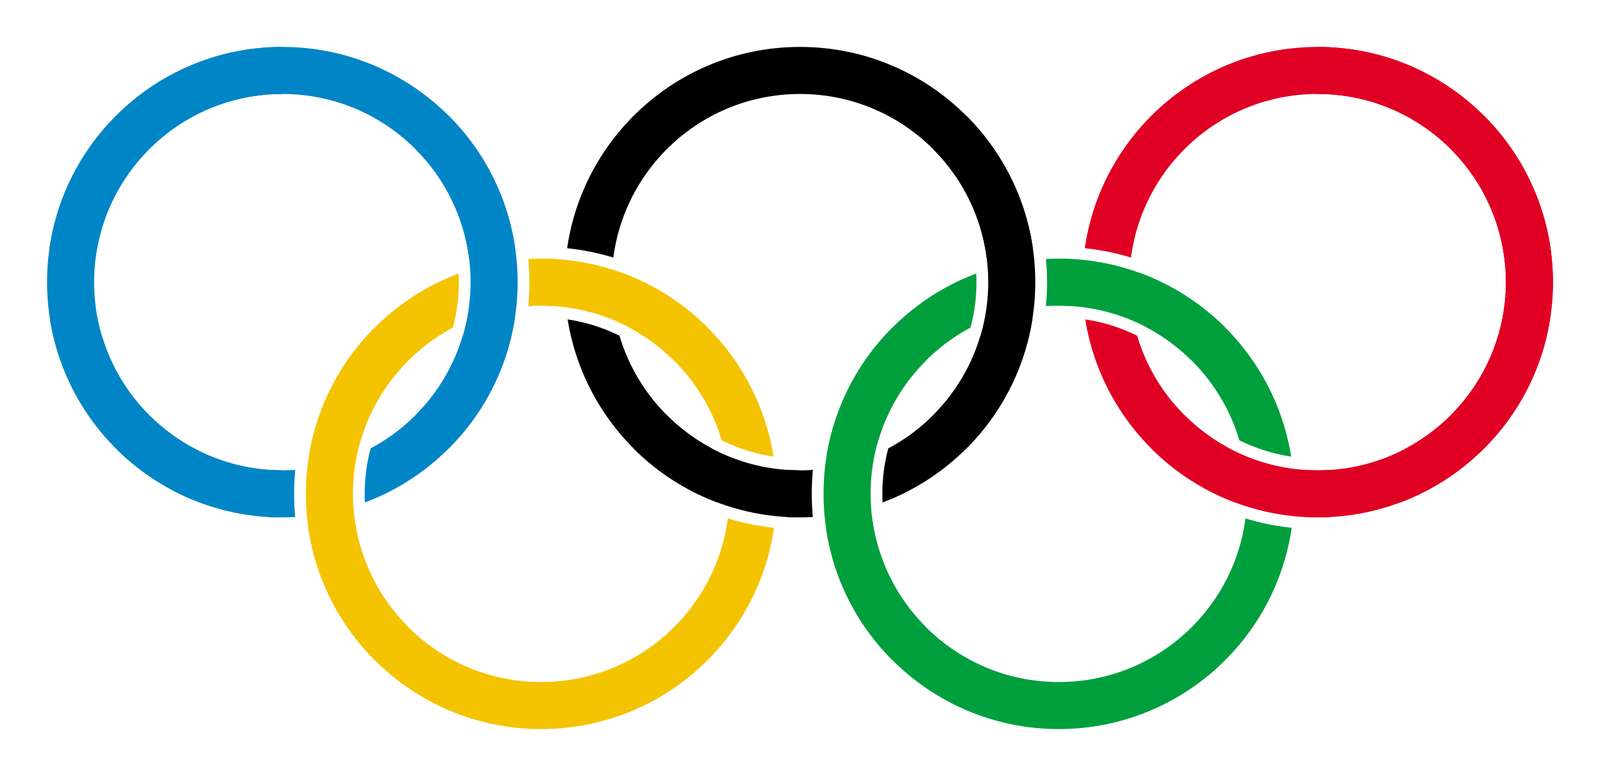 олімпіада скласти пазл онлайн з фото